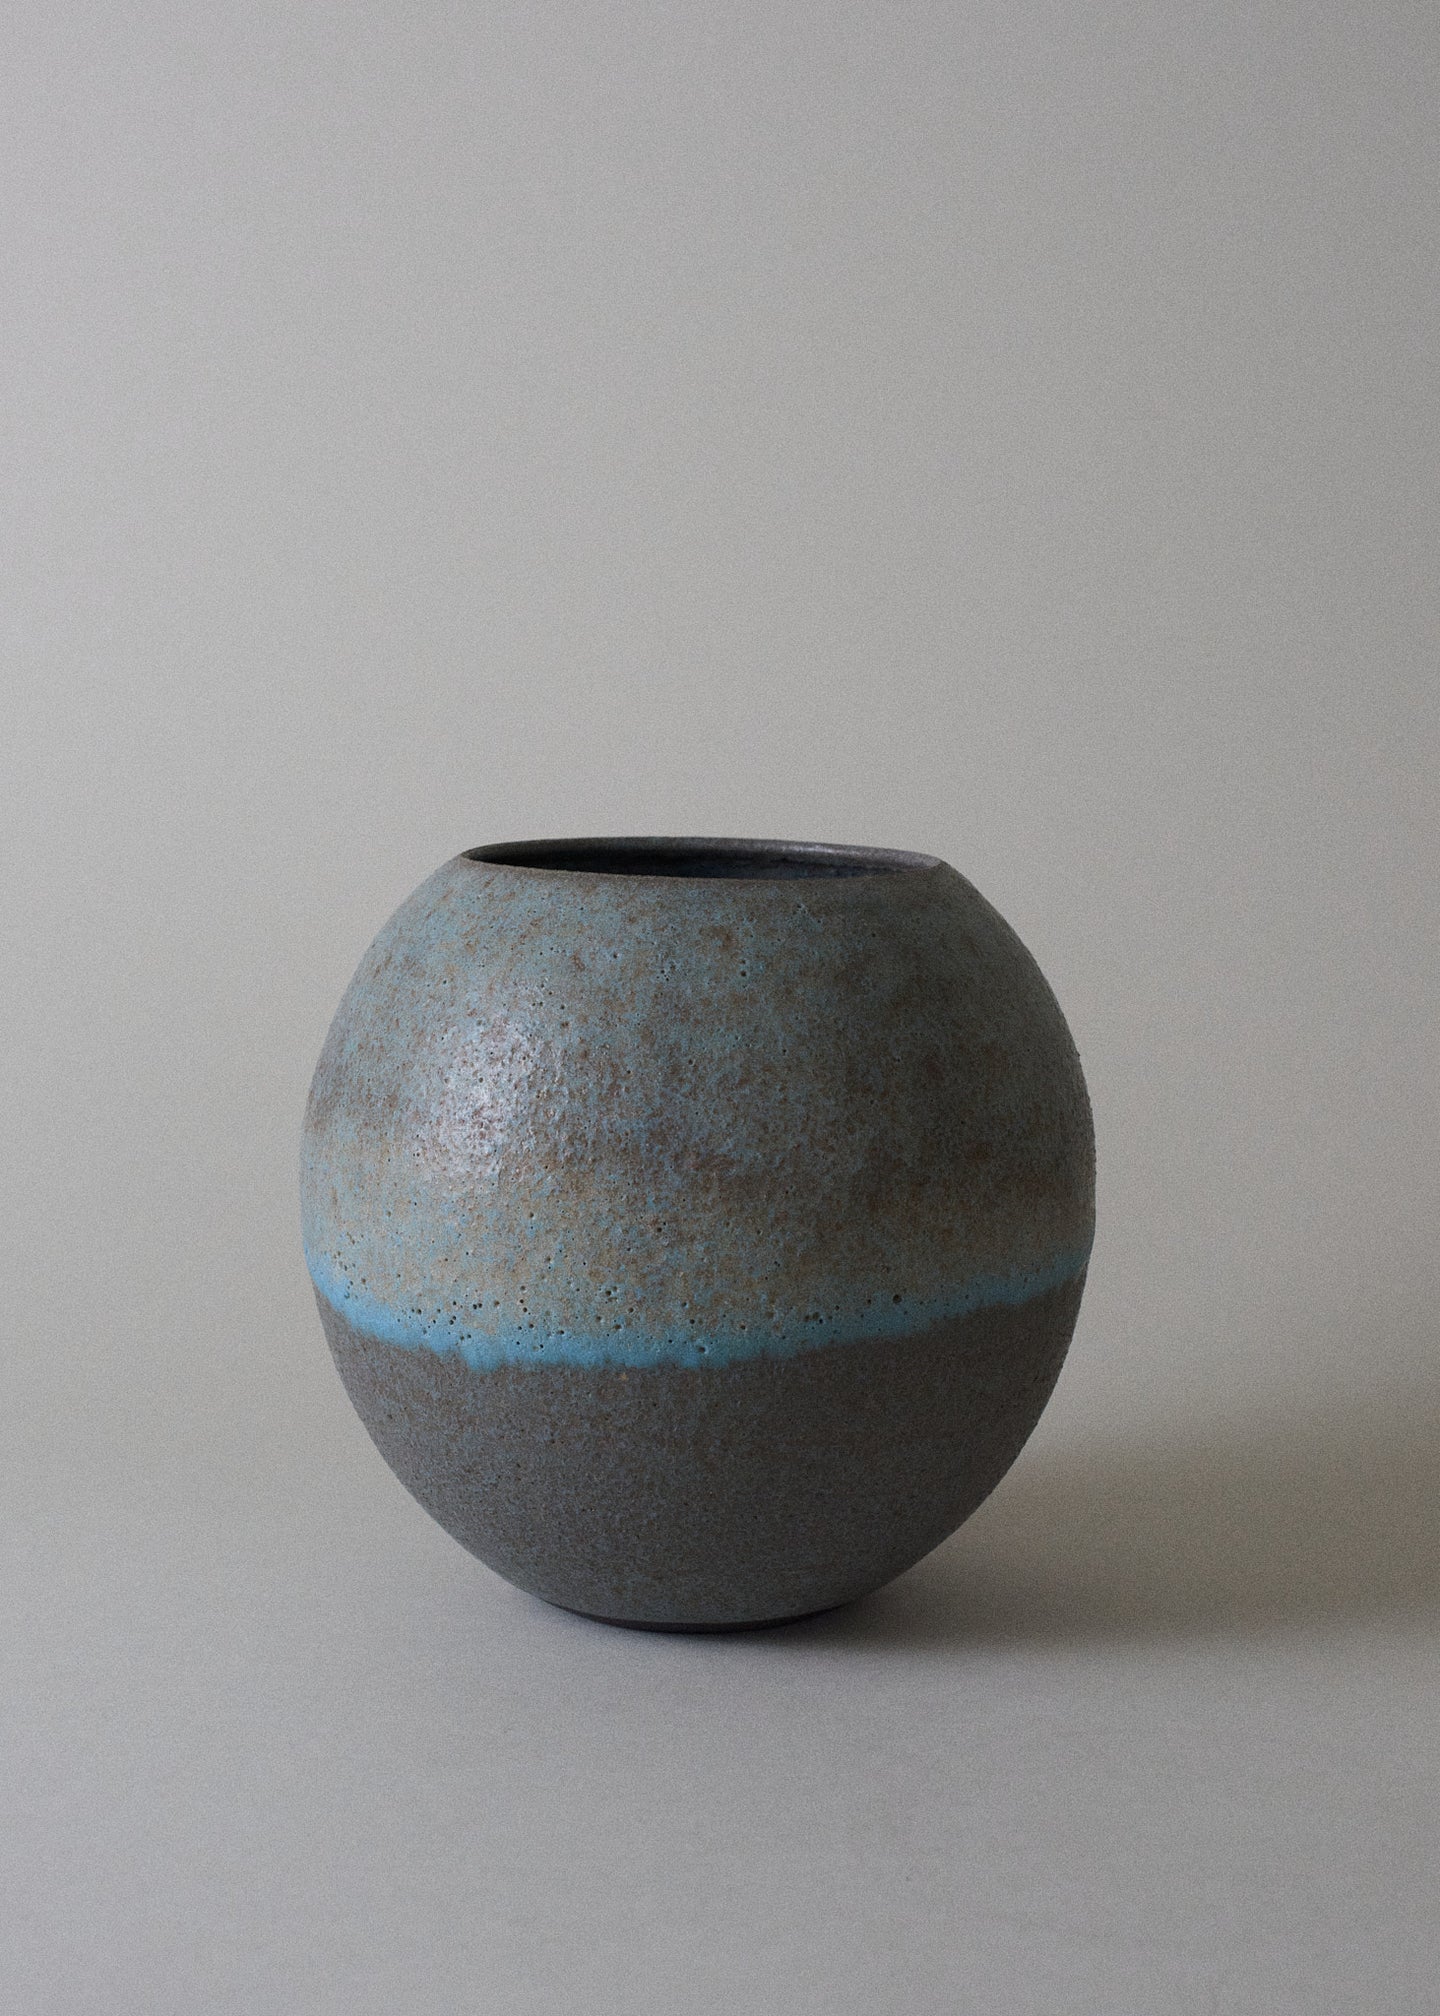 Orb Vase in Pool - Victoria Morris Pottery